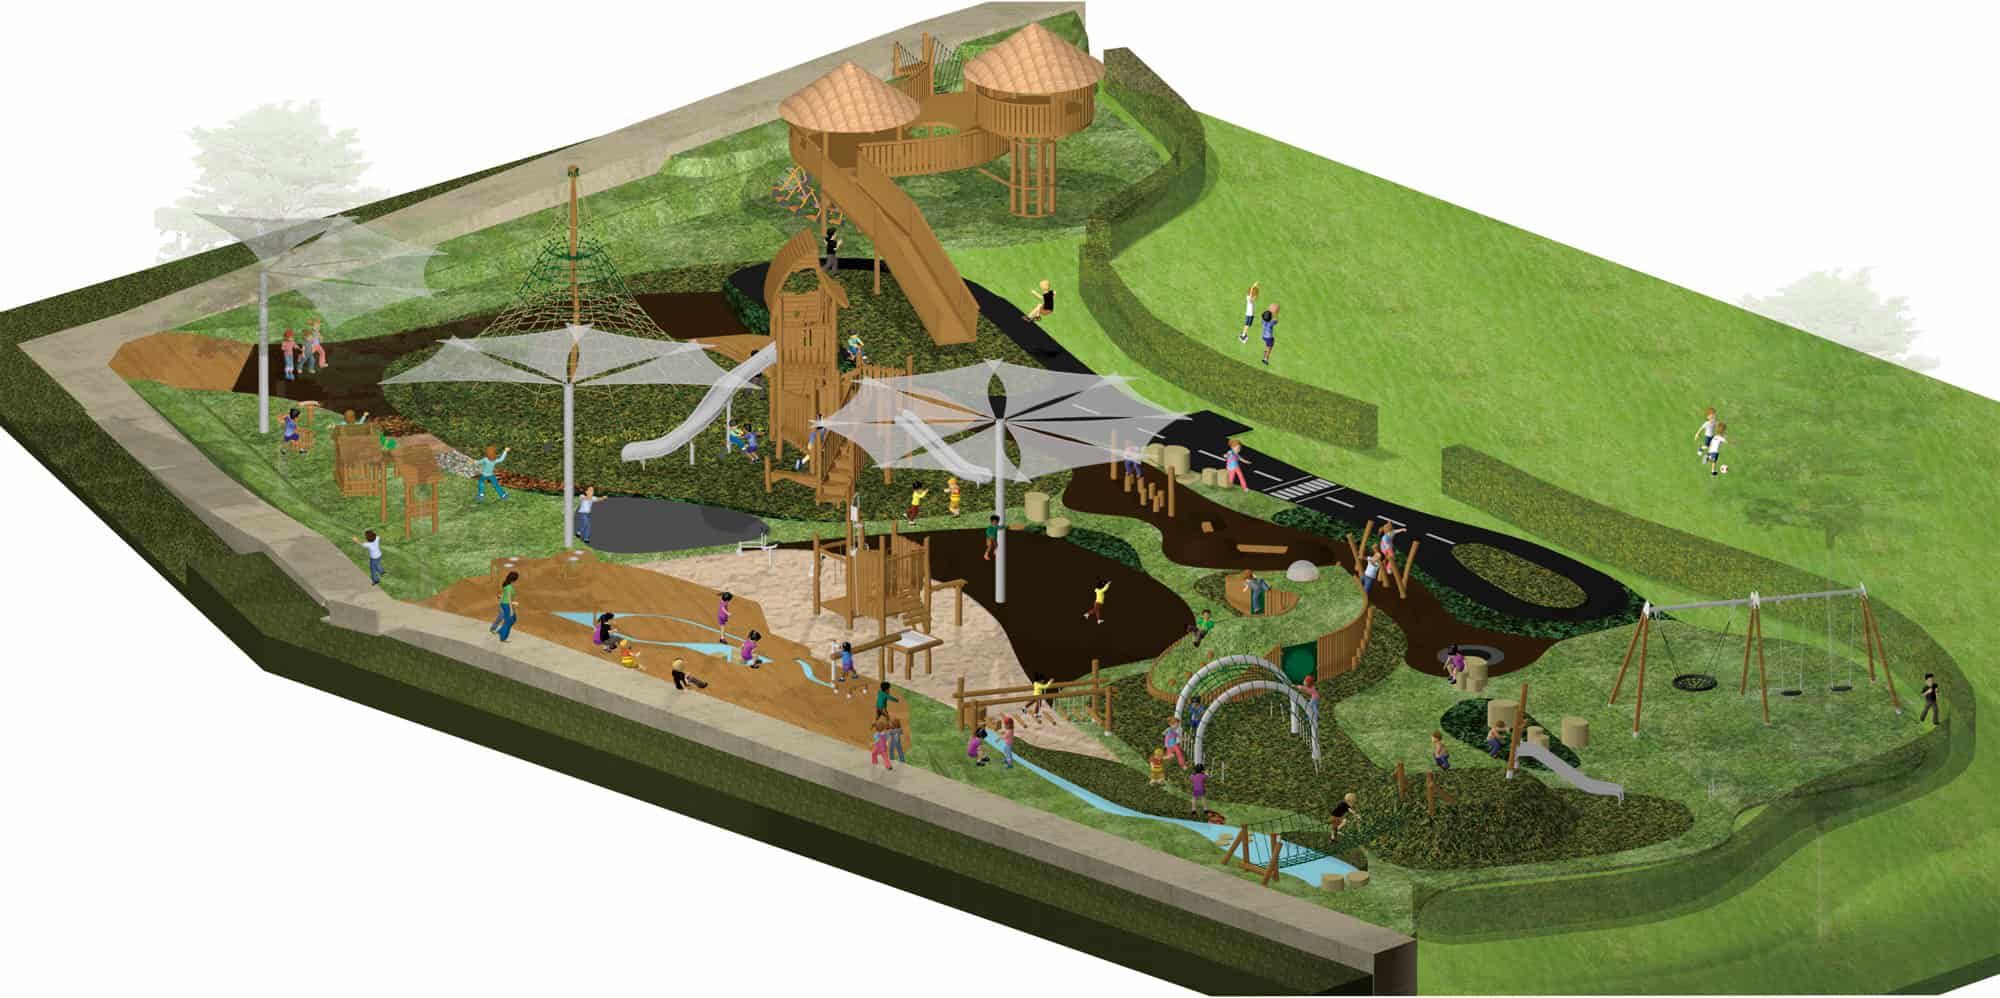  480_img2_ISB-new-early-childhood-playground-inspires-the-imagination ISB’s New Early Childhood Playground Inspires the Imagination | World Schools